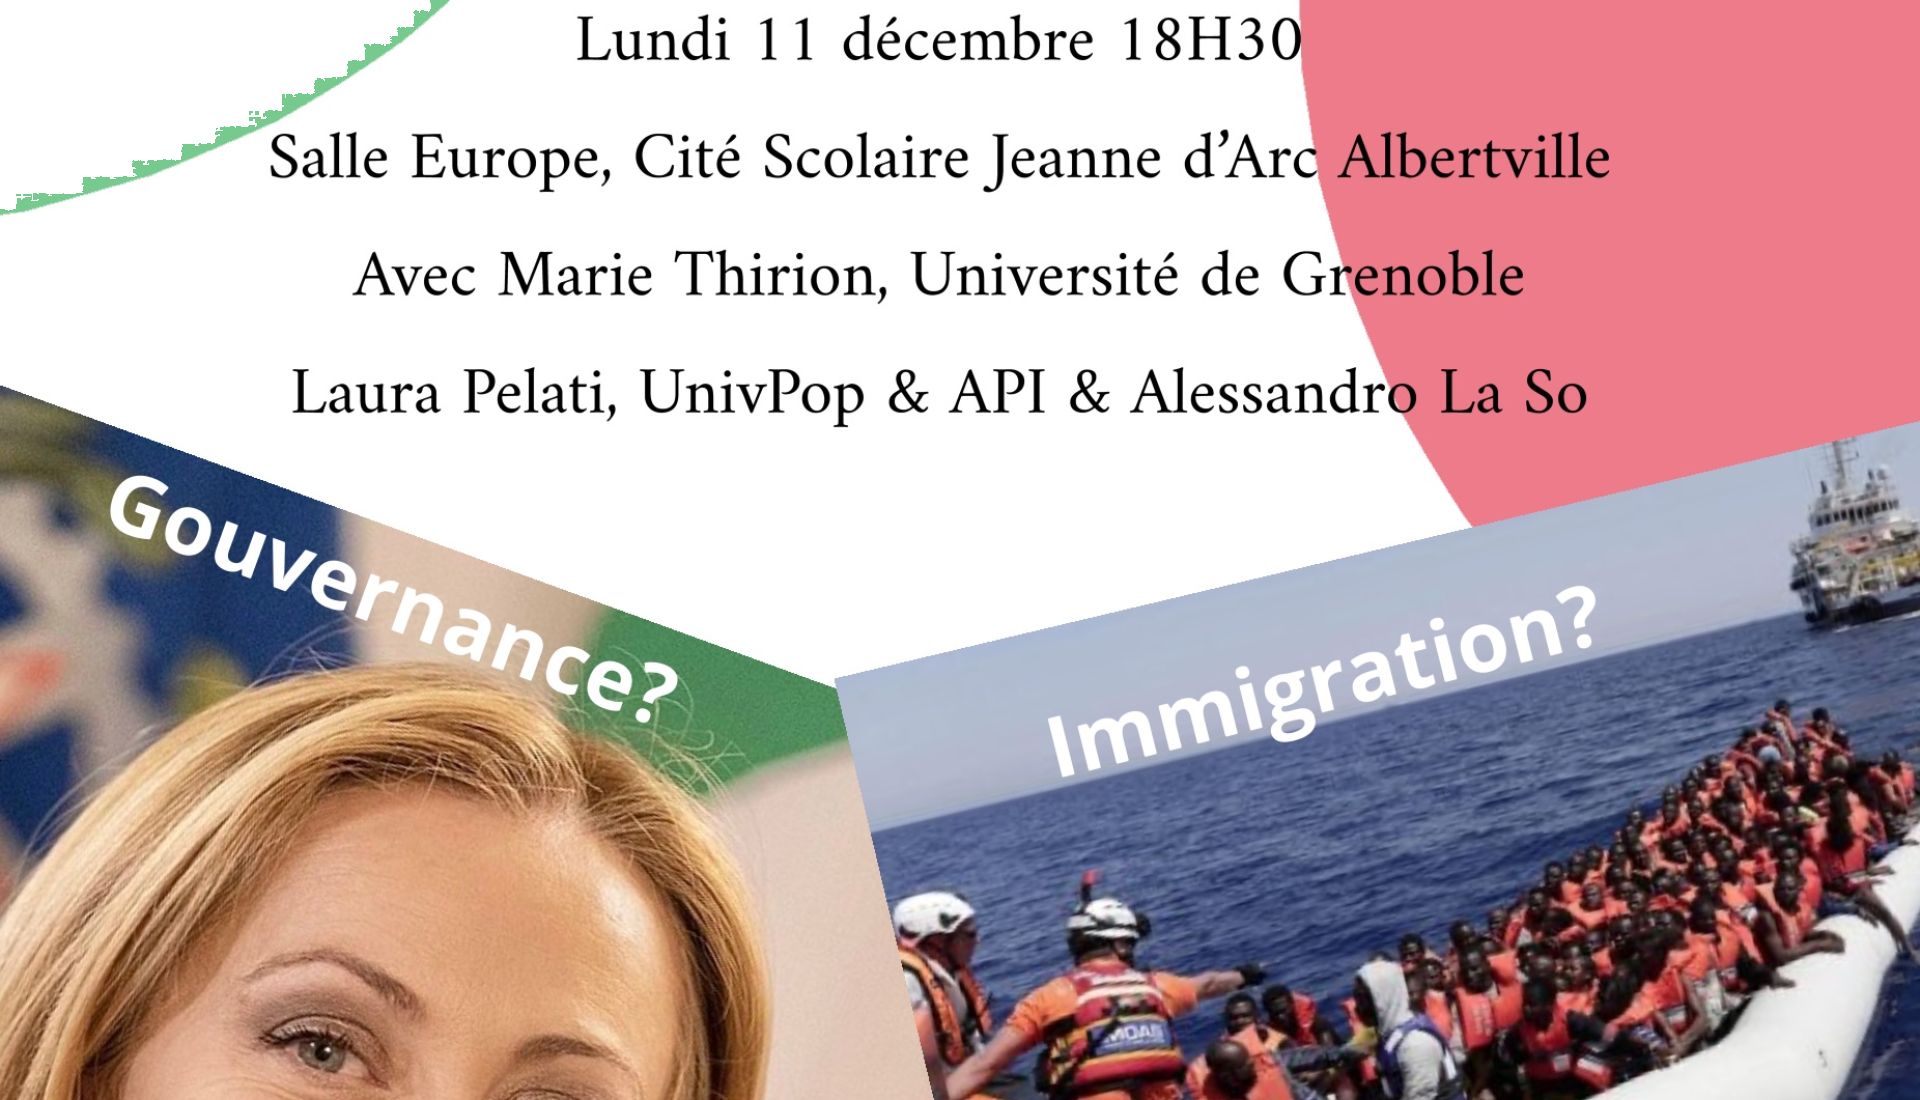 Où va l’Italie? : L’Italie, sans clichés, sous Giorgia Meloni